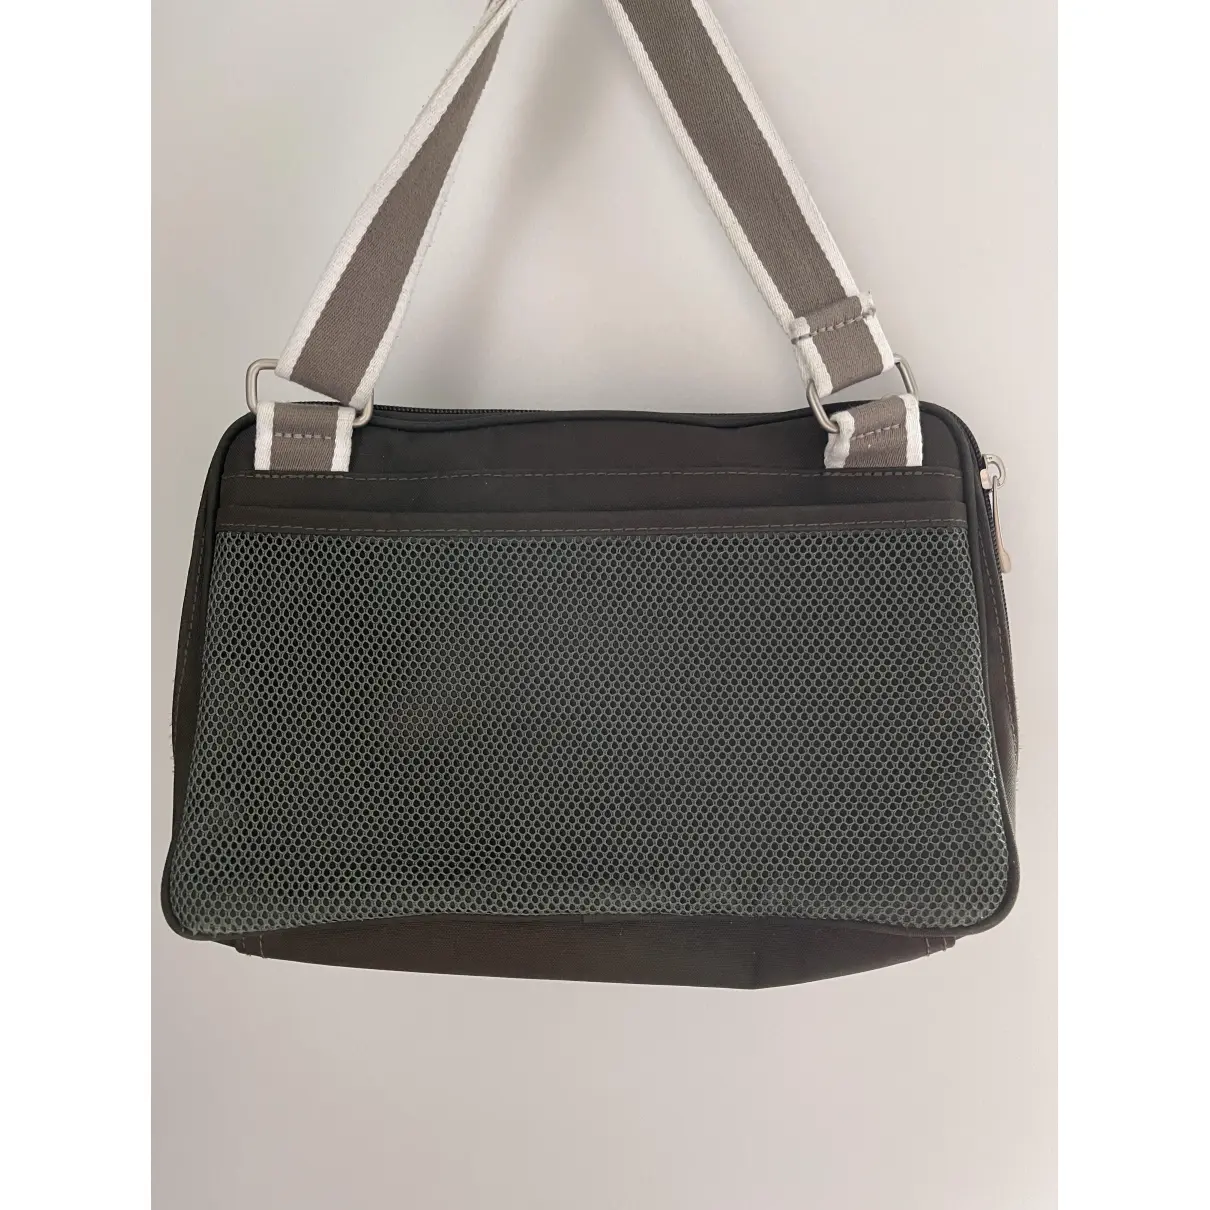 Buy Lacoste Cloth crossbody bag online